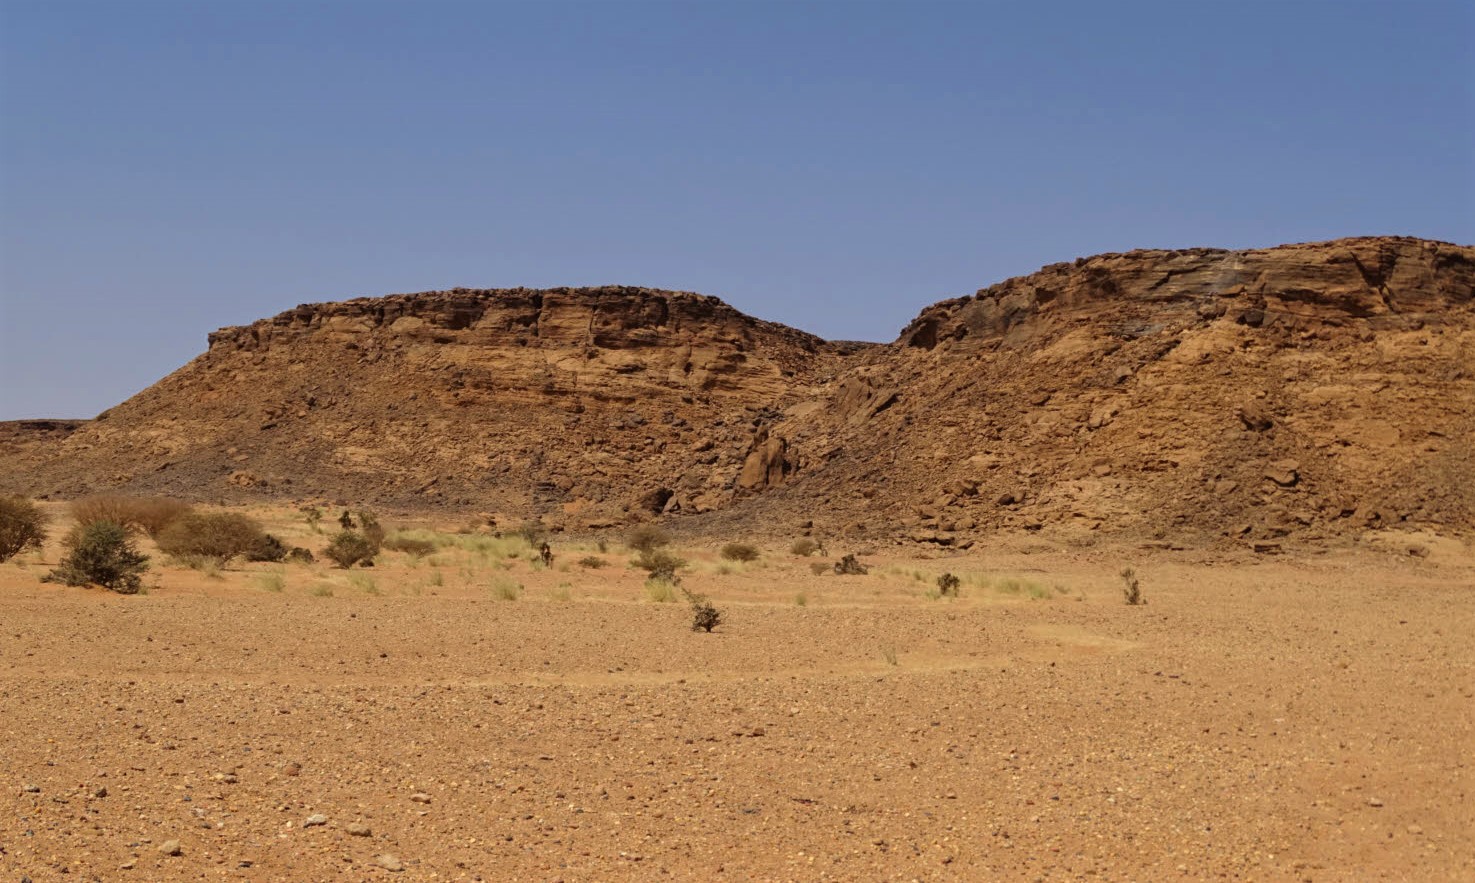 The Desert, Northern State, Sudan